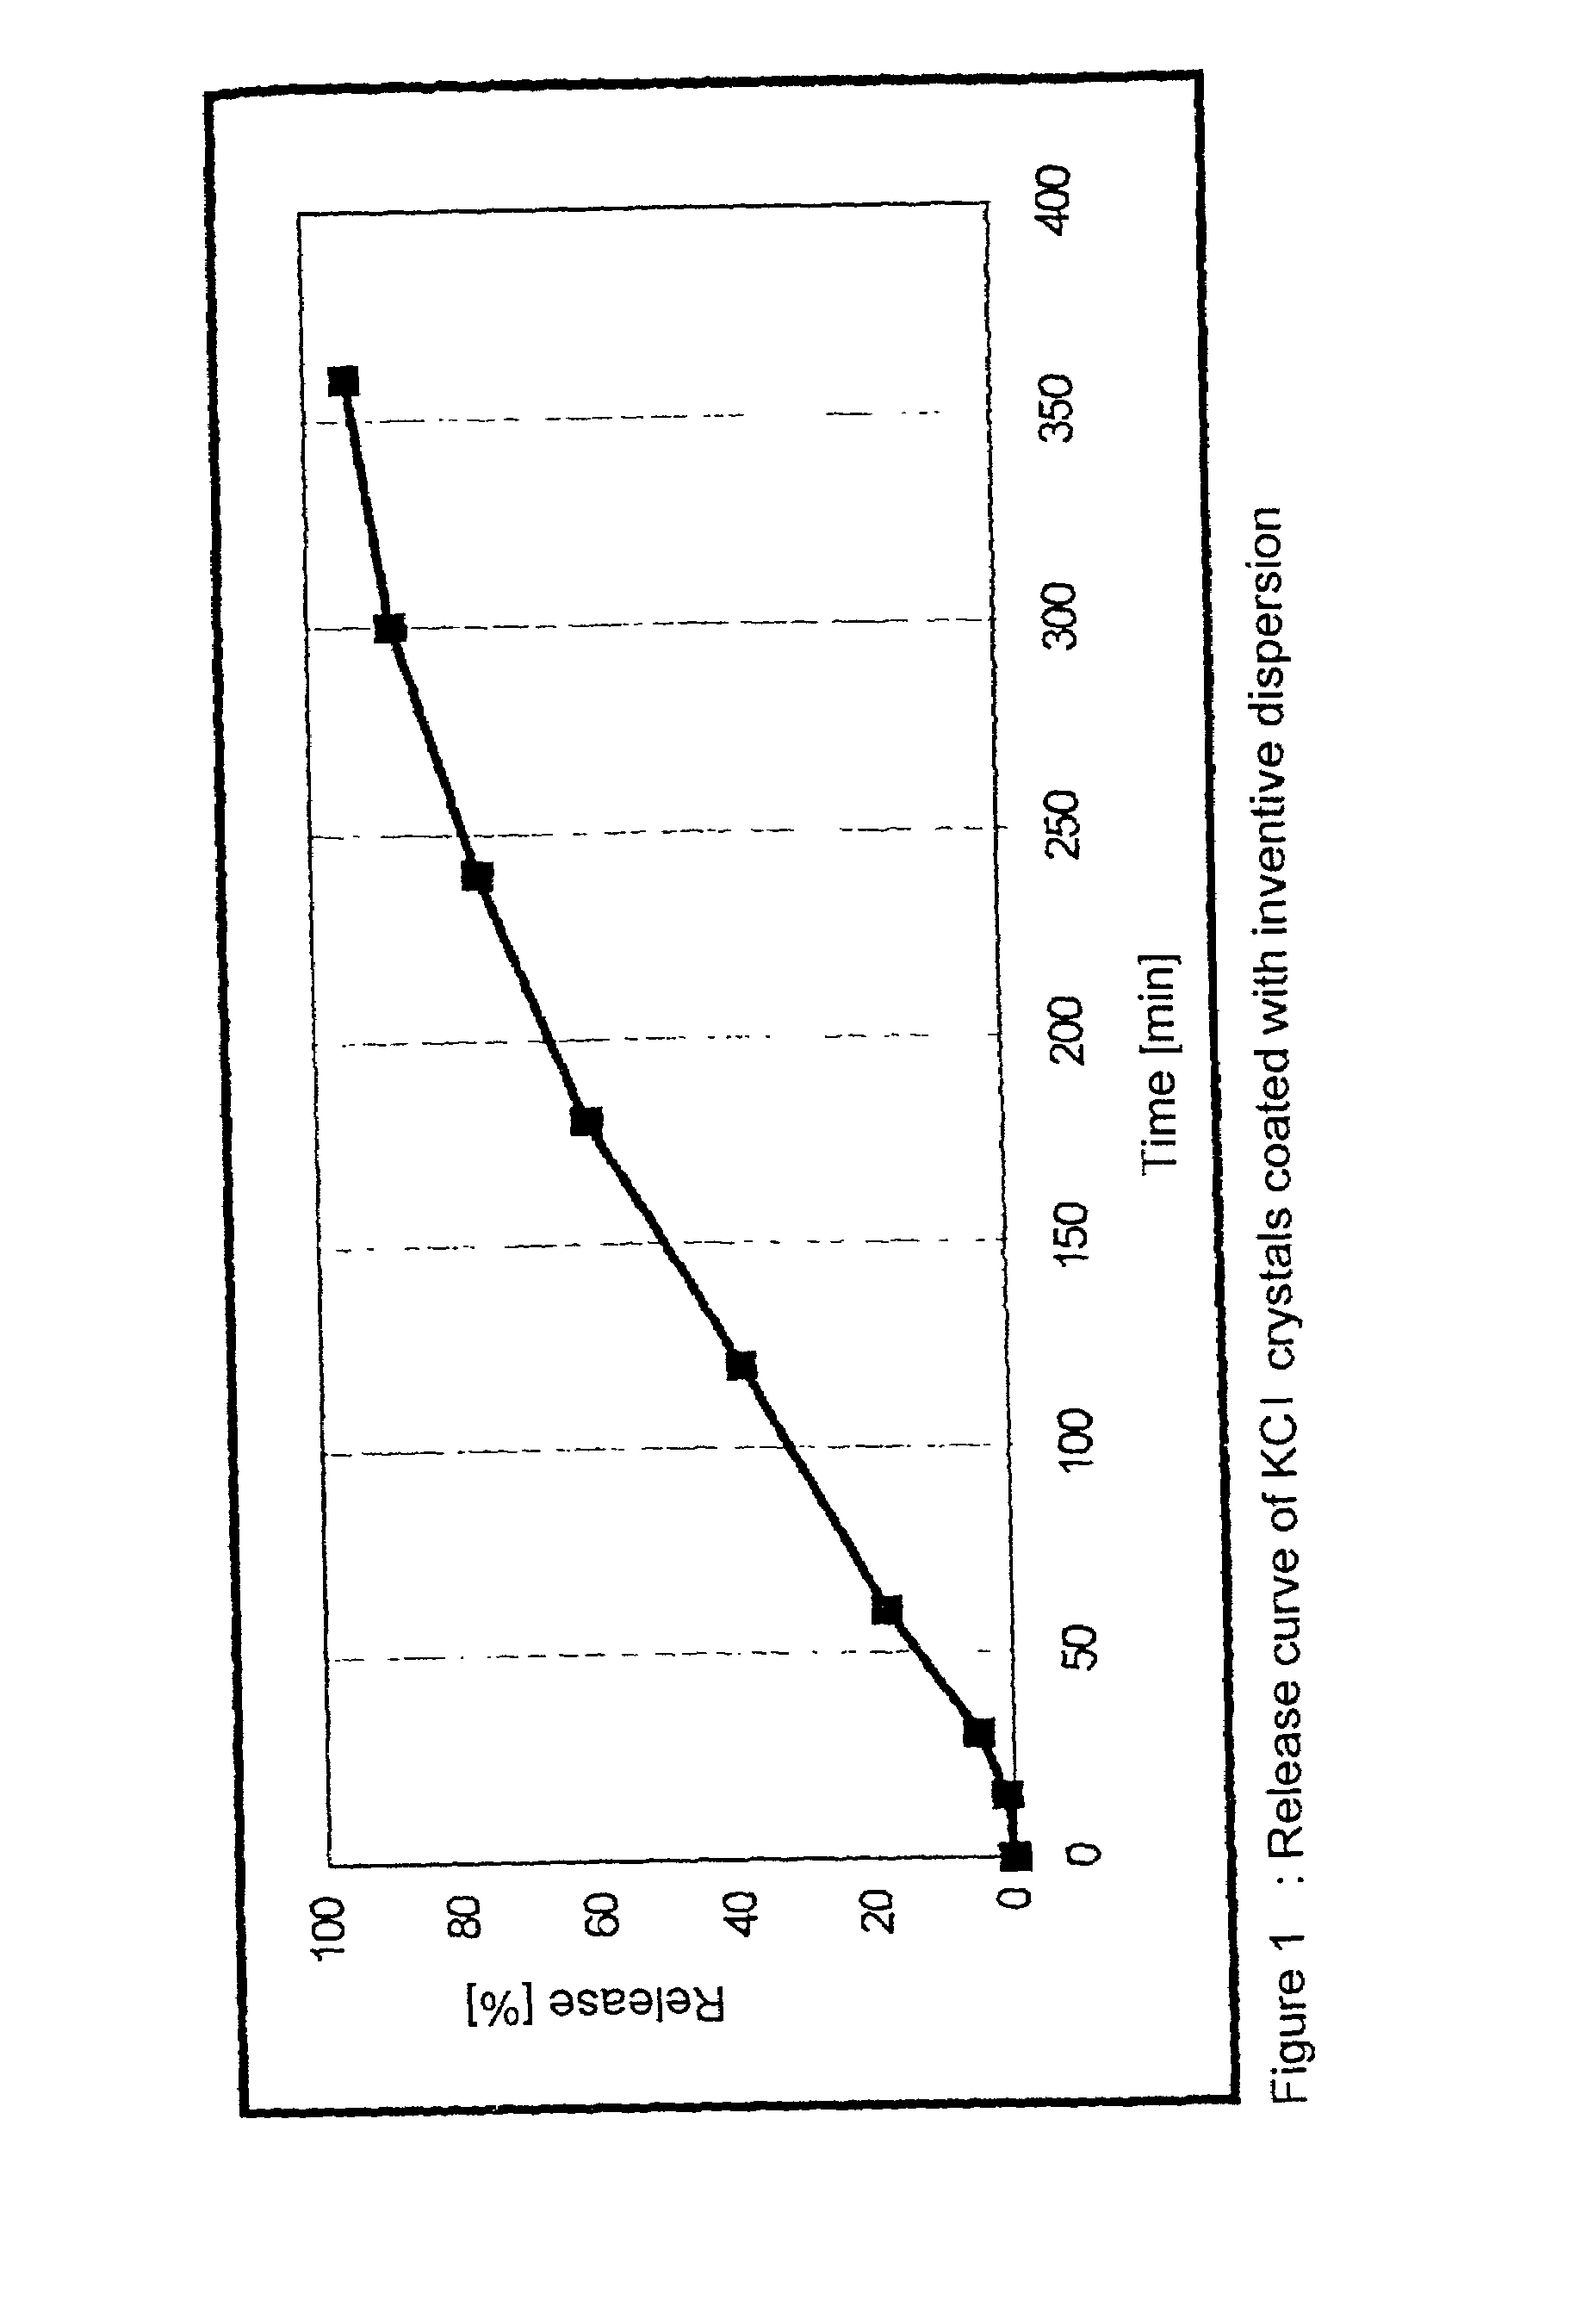 Dispersion comprising a non-ionic emulsifier